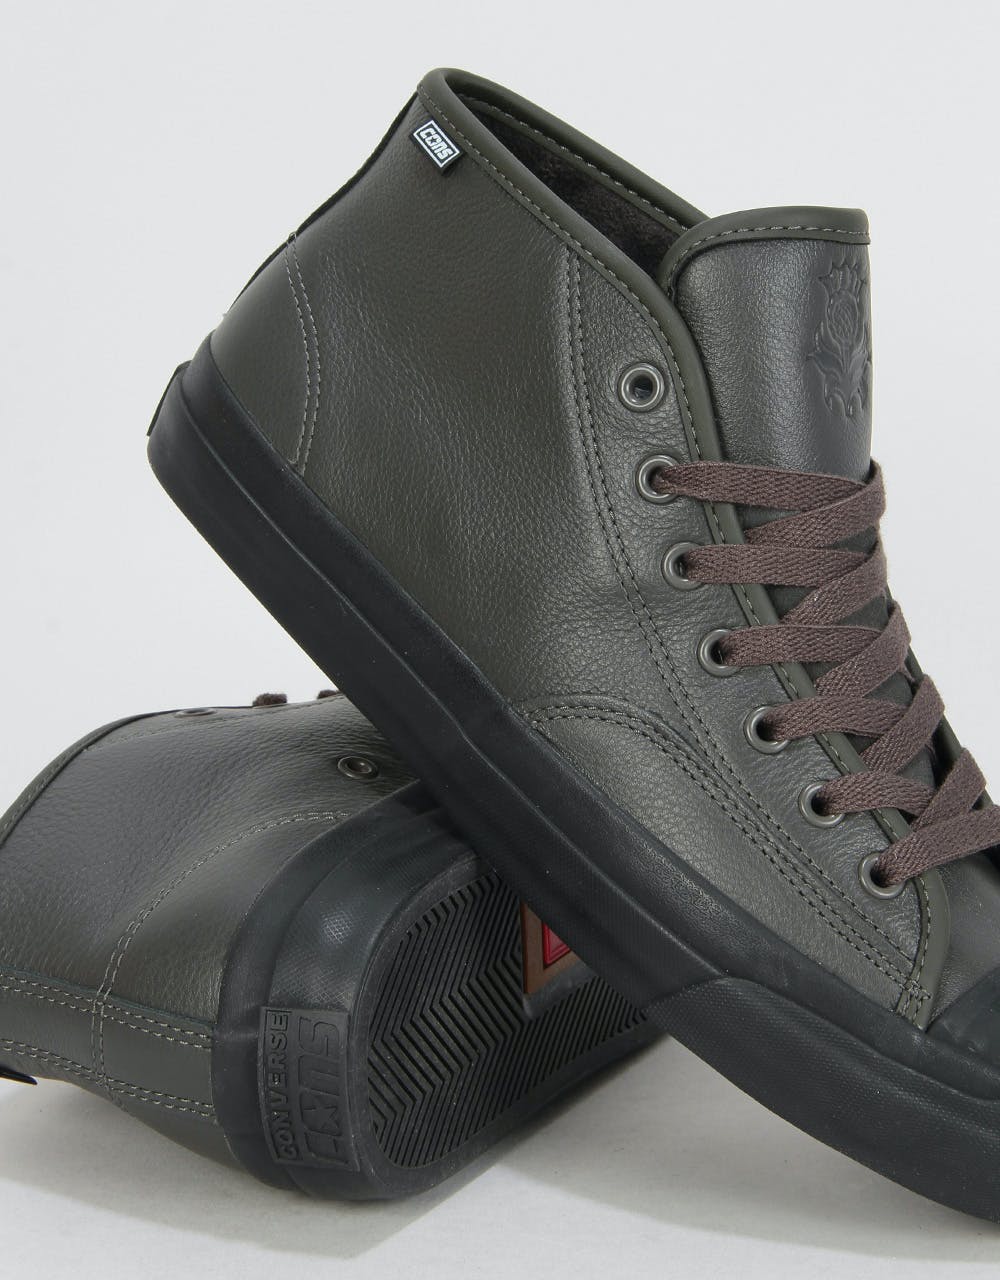 Converse Jack Purcell Pro Mid Skate Shoes - Beluga/Black/Black